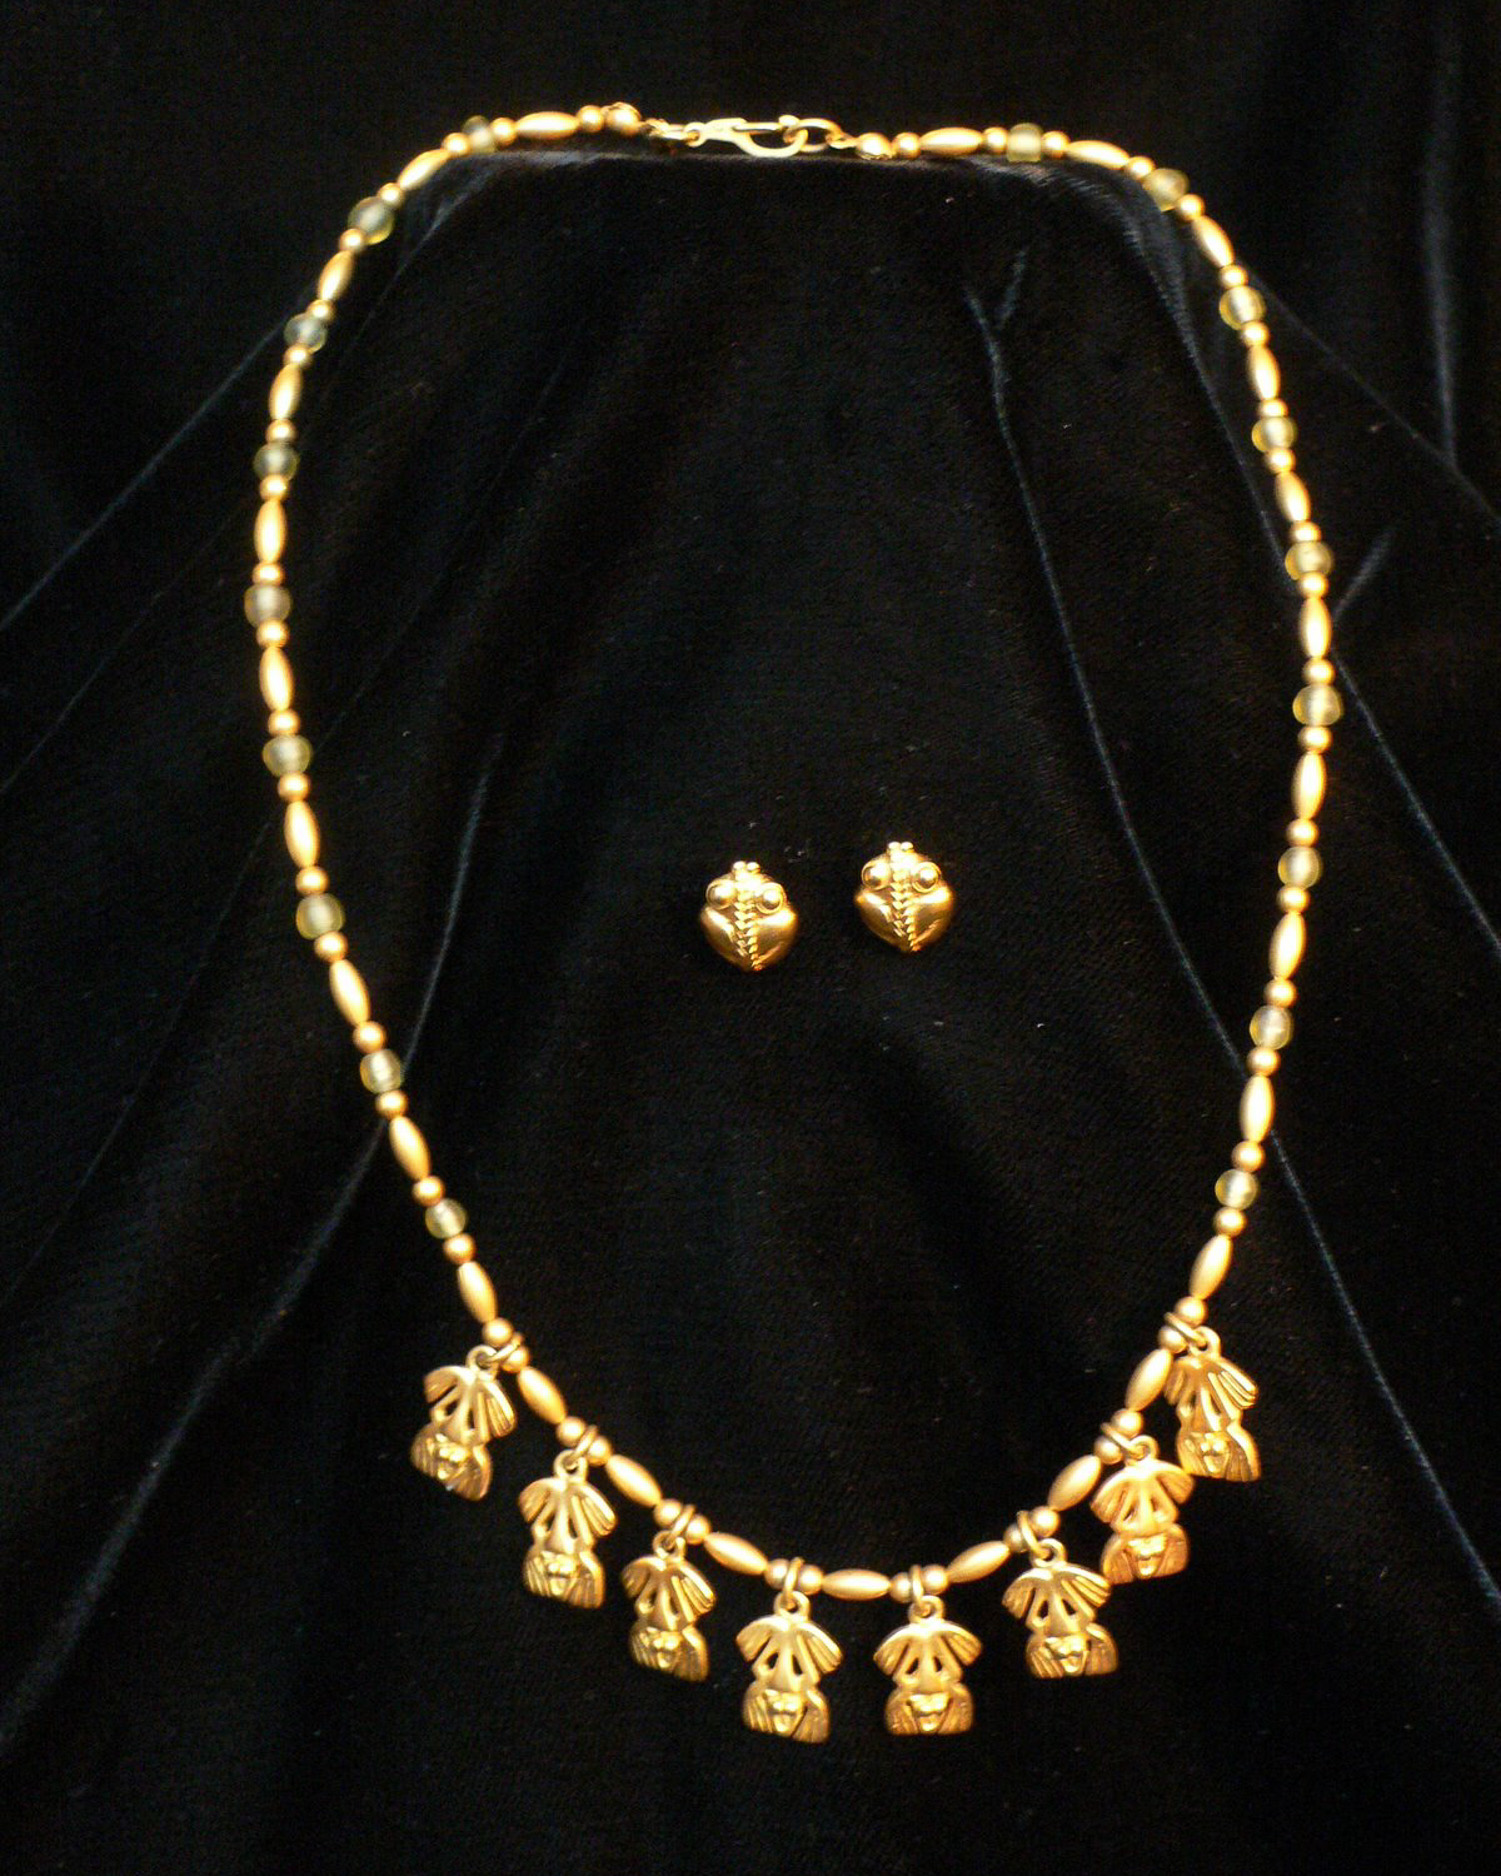 Necklace from Ecuador Photo Heatheronhertravels.com